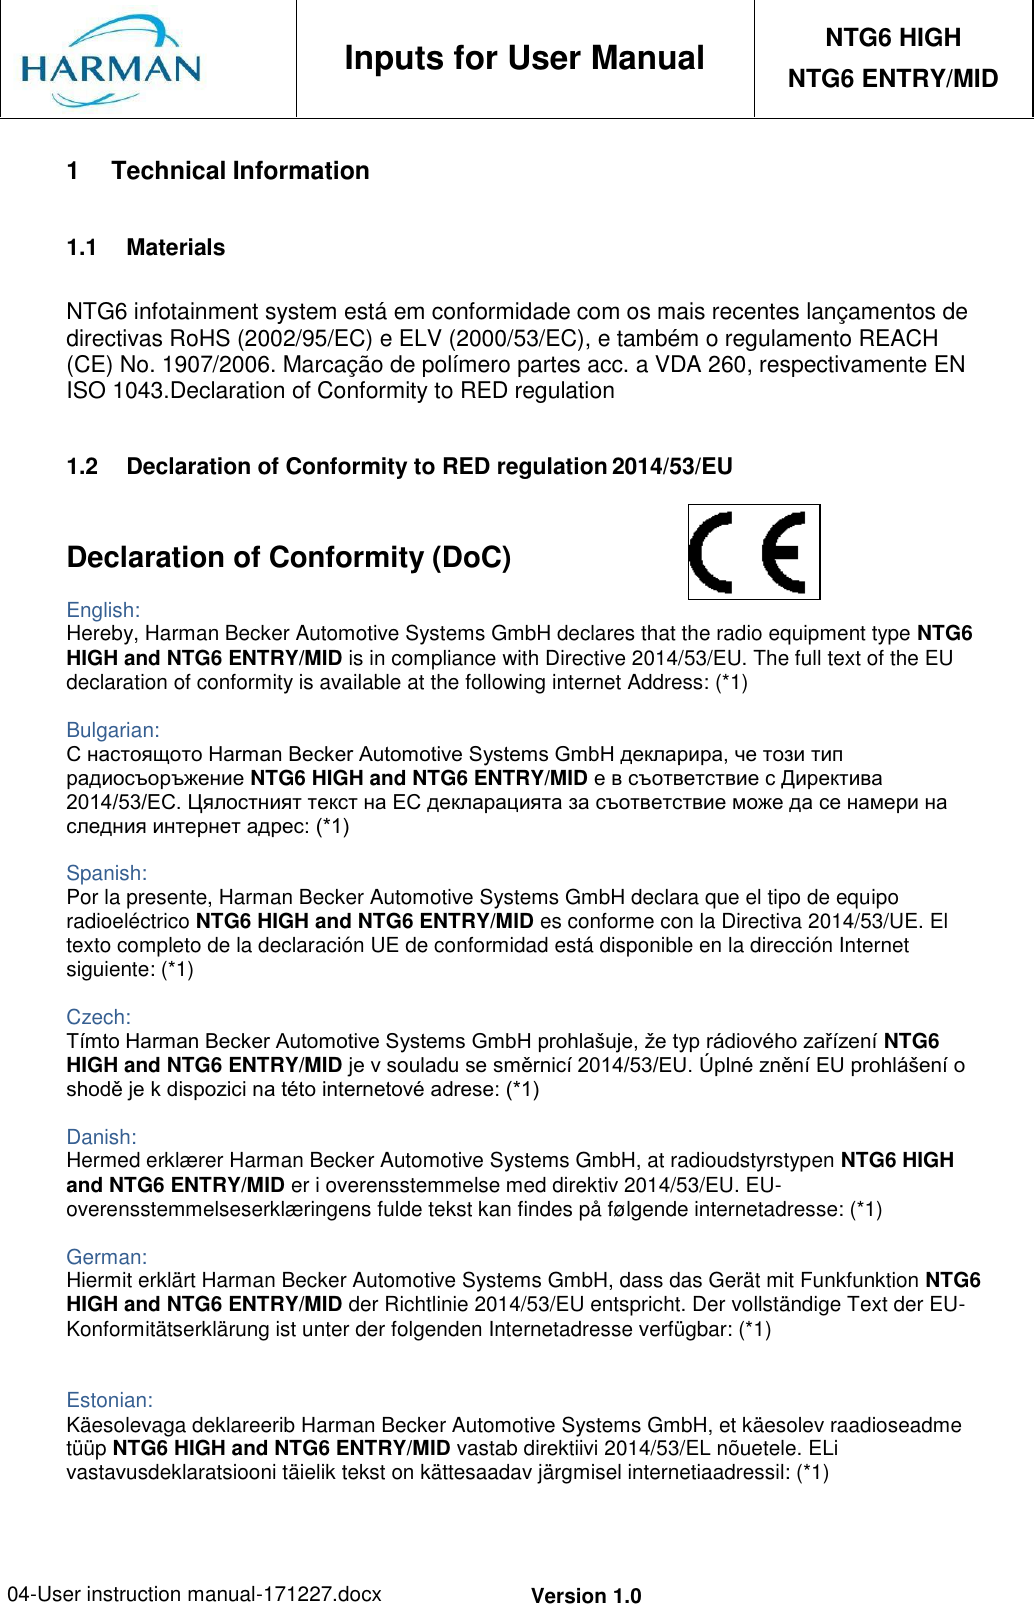 04-User instruction manual-171227.docx Version 1.0     Inputs for User Manual NTG6 HIGH NTG6 ENTRY/MID  1 Technical Information  1.1  Materials  NTG6 infotainment system está em conformidade com os mais recentes lançamentos de directivas RoHS (2002/95/EC) e ELV (2000/53/EC), e também o regulamento REACH (CE) No. 1907/2006. Marcação de polímero partes acc. a VDA 260, respectivamente EN ISO 1043.Declaration of Conformity to RED regulation  1.2  Declaration of Conformity to RED regulation 2014/53/EU   Declaration of Conformity (DoC) English: Hereby, Harman Becker Automotive Systems GmbH declares that the radio equipment type NTG6 HIGH and NTG6 ENTRY/MID is in compliance with Directive 2014/53/EU. The full text of the EU declaration of conformity is available at the following internet Address: (*1)  Bulgarian: С настоящото Harman Becker Automotive Systems GmbH декларира, че този тип радиосъоръжение NTG6 HIGH and NTG6 ENTRY/MID е в съответствие с Директива 2014/53/ЕС. Цялостният текст на ЕС декларацията за съответствие може да се намери на следния интернет адрес: (*1)  Spanish: Por la presente, Harman Becker Automotive Systems GmbH declara que el tipo de equipo radioeléctrico NTG6 HIGH and NTG6 ENTRY/MID es conforme con la Directiva 2014/53/UE. El texto completo de la declaración UE de conformidad está disponible en la dirección Internet siguiente: (*1)  Czech: Tímto Harman Becker Automotive Systems GmbH prohlašuje, že typ rádiového zařízení NTG6 HIGH and NTG6 ENTRY/MID je v souladu se směrnicí 2014/53/EU. Úplné znění EU prohlášení o shodě je k dispozici na této internetové adrese: (*1)  Danish: Hermed erklærer Harman Becker Automotive Systems GmbH, at radioudstyrstypen NTG6 HIGH and NTG6 ENTRY/MID er i overensstemmelse med direktiv 2014/53/EU. EU- overensstemmelseserklæringens fulde tekst kan findes på følgende internetadresse: (*1)  German: Hiermit erklärt Harman Becker Automotive Systems GmbH, dass das Gerät mit Funkfunktion NTG6 HIGH and NTG6 ENTRY/MID der Richtlinie 2014/53/EU entspricht. Der vollständige Text der EU- Konformitätserklärung ist unter der folgenden Internetadresse verfügbar: (*1)   Estonian: Käesolevaga deklareerib Harman Becker Automotive Systems GmbH, et käesolev raadioseadme tüüp NTG6 HIGH and NTG6 ENTRY/MID vastab direktiivi 2014/53/EL nõuetele. ELi vastavusdeklaratsiooni täielik tekst on kättesaadav järgmisel internetiaadressil: (*1) 